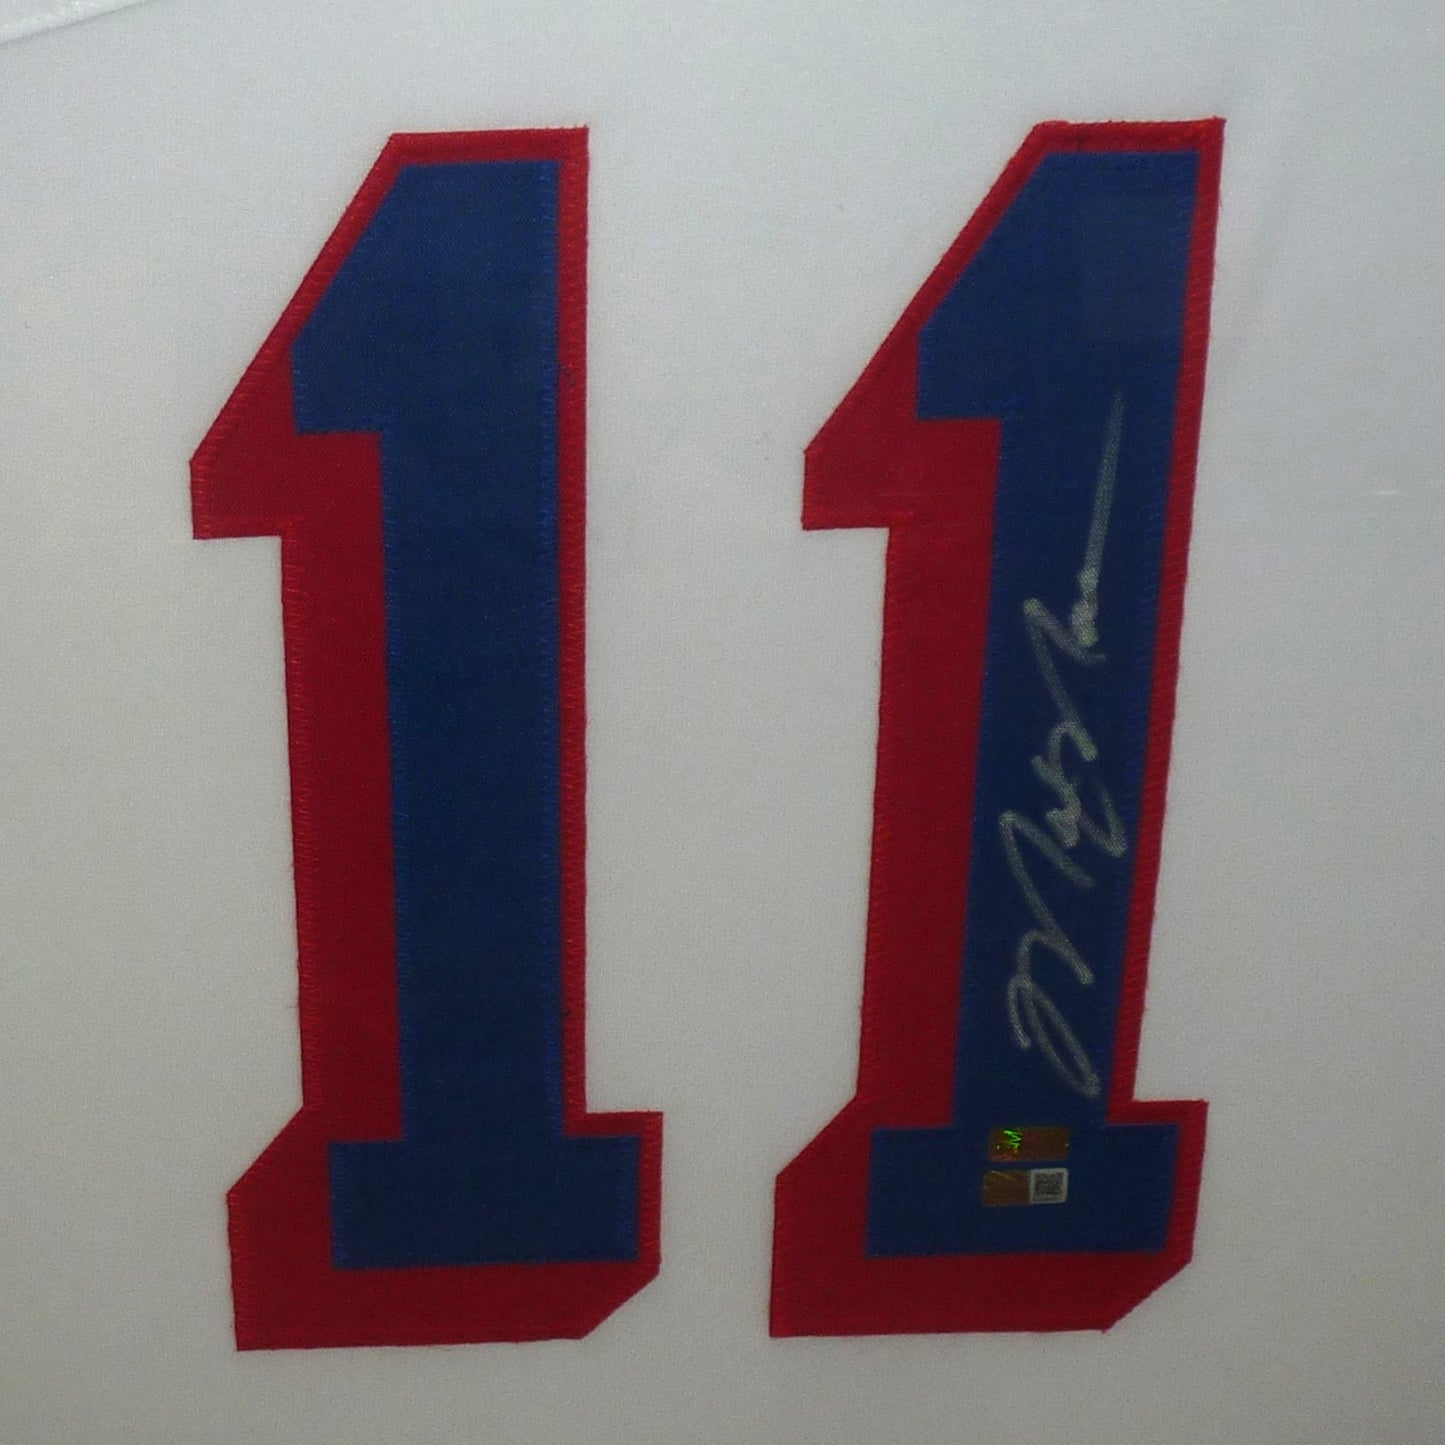 Mark Messier Autographed New York Rangers (White #11) Deluxe Framed Jersey - Steiner